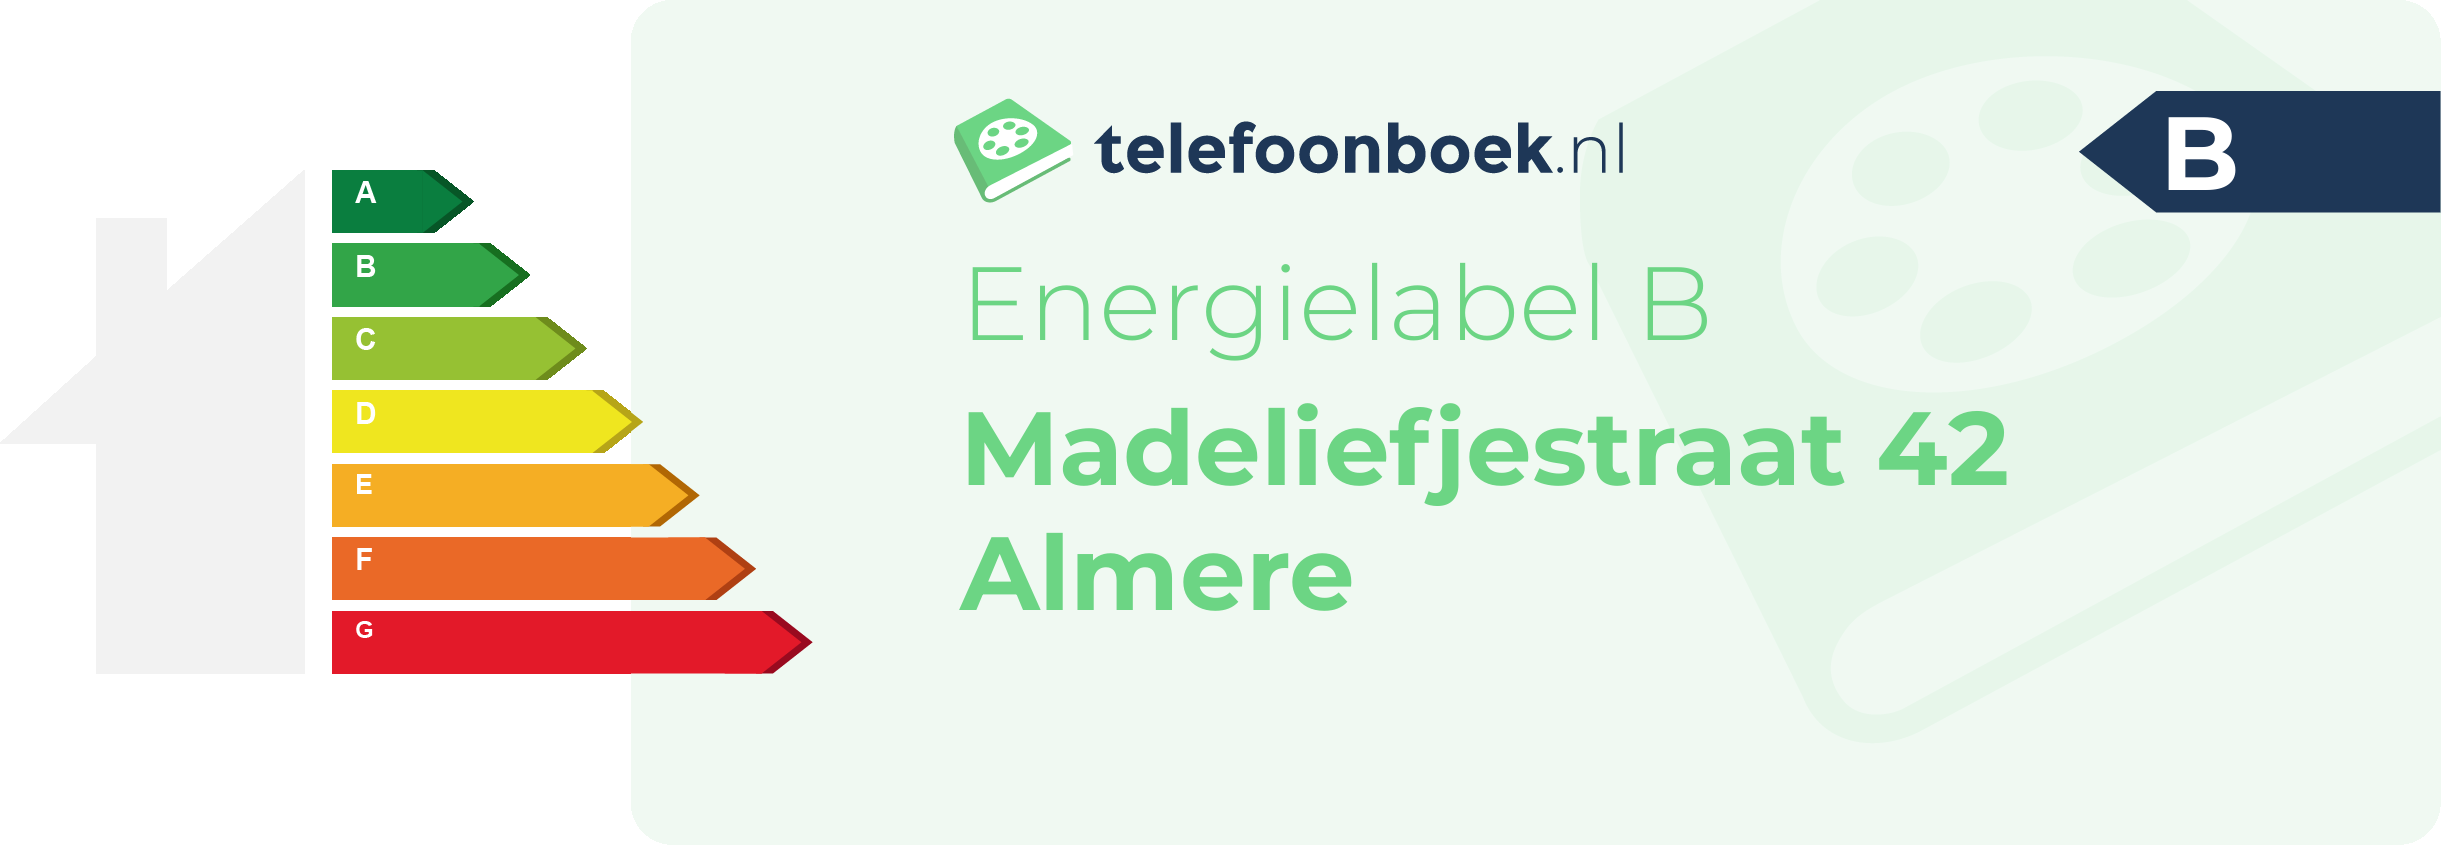 Energielabel Madeliefjestraat 42 Almere